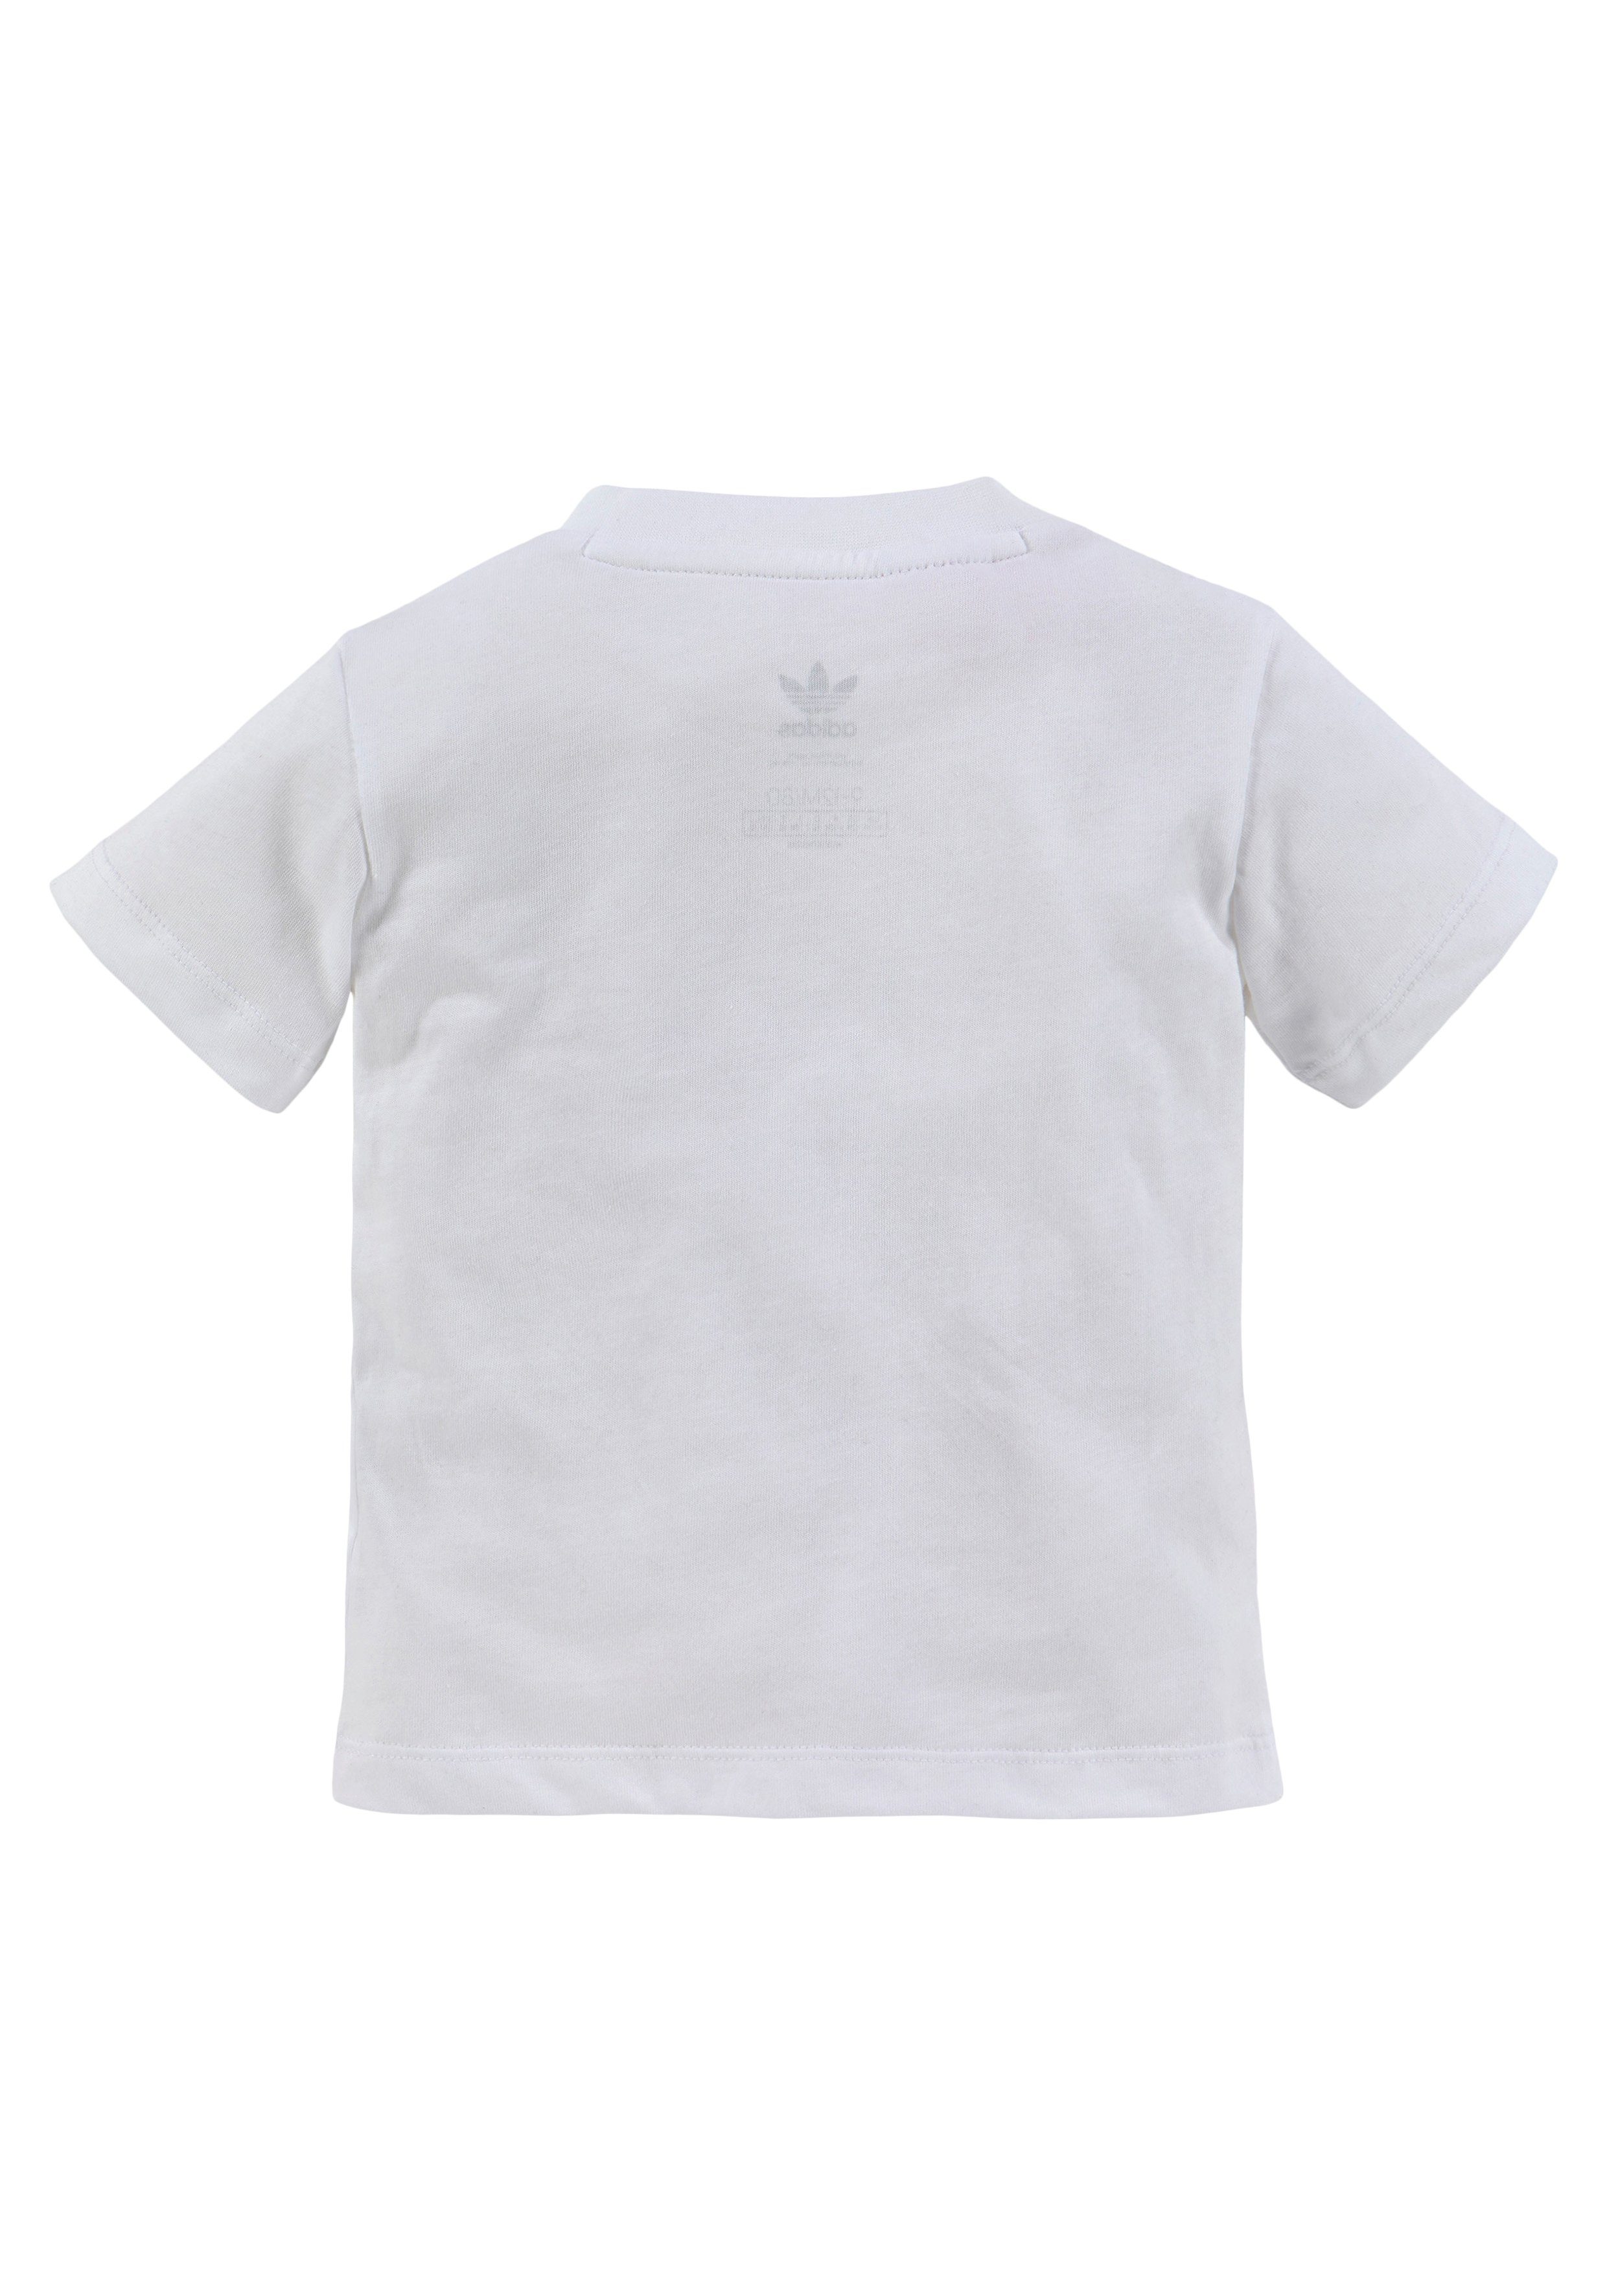 adidas Originals T-Shirt Shorts / (Set) SHORTS Pink Bliss White UND TREFOIL & SET